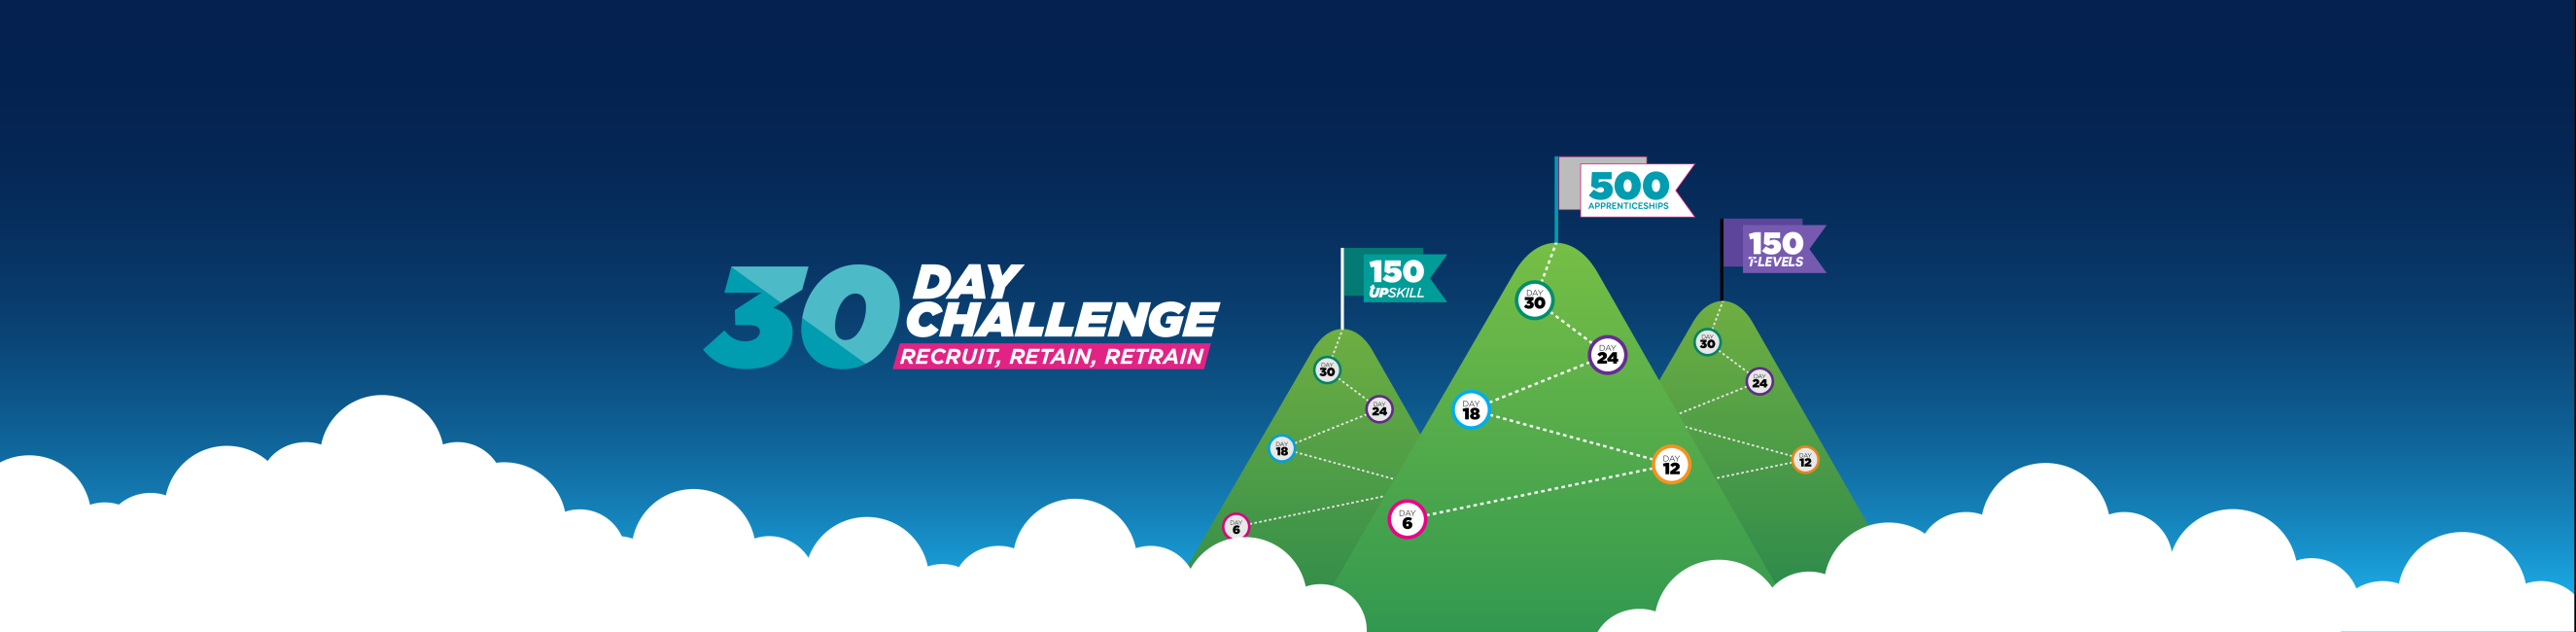 30 Day Challenge 